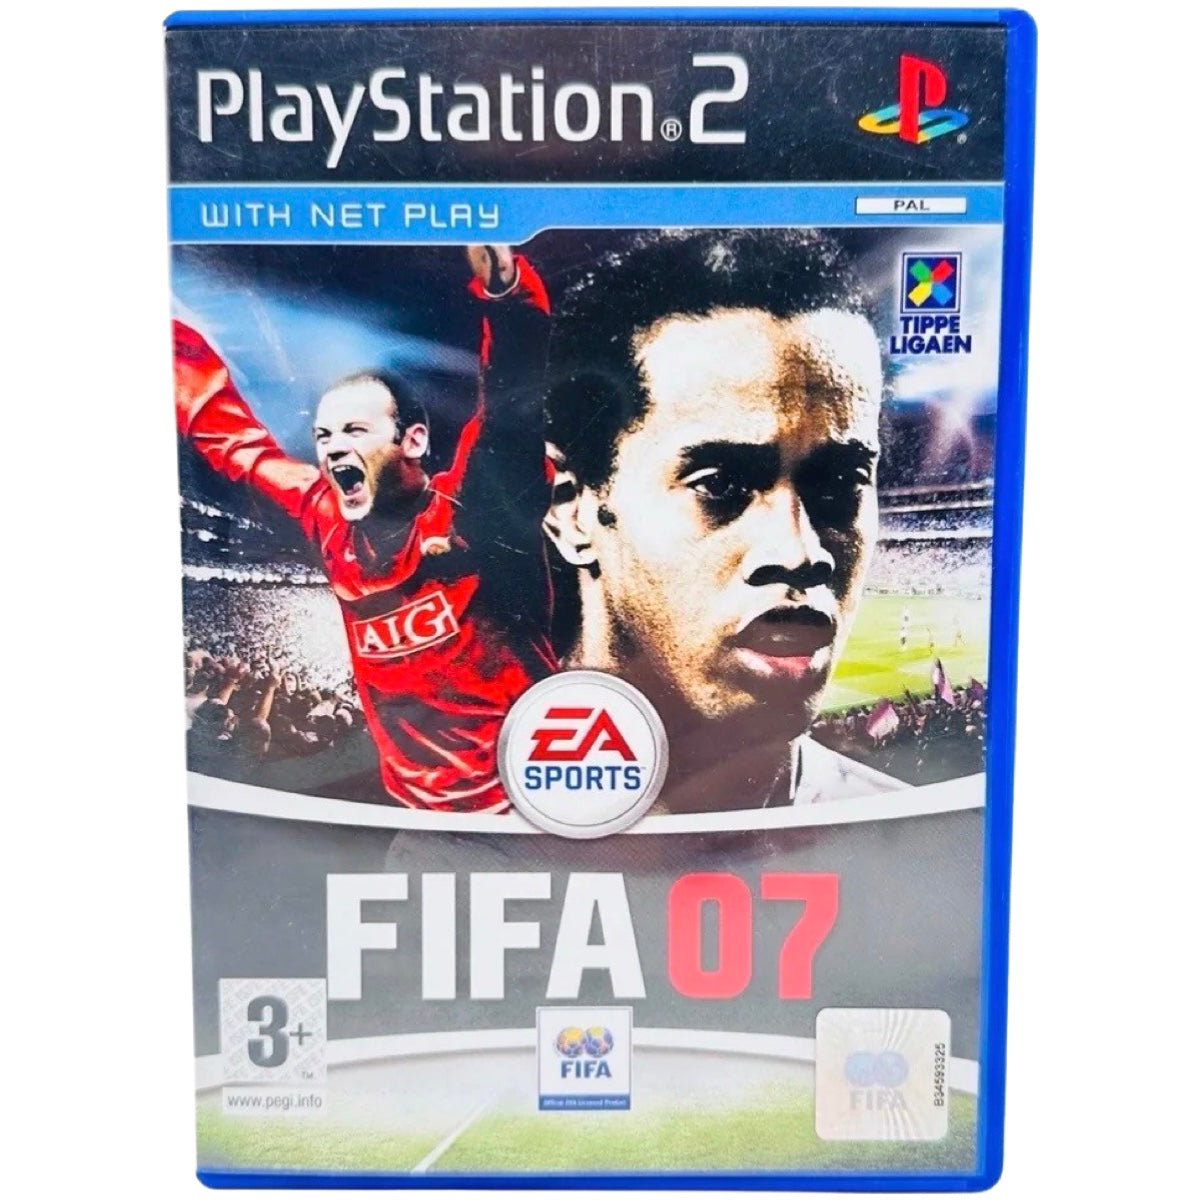 PS2: FIFA 07